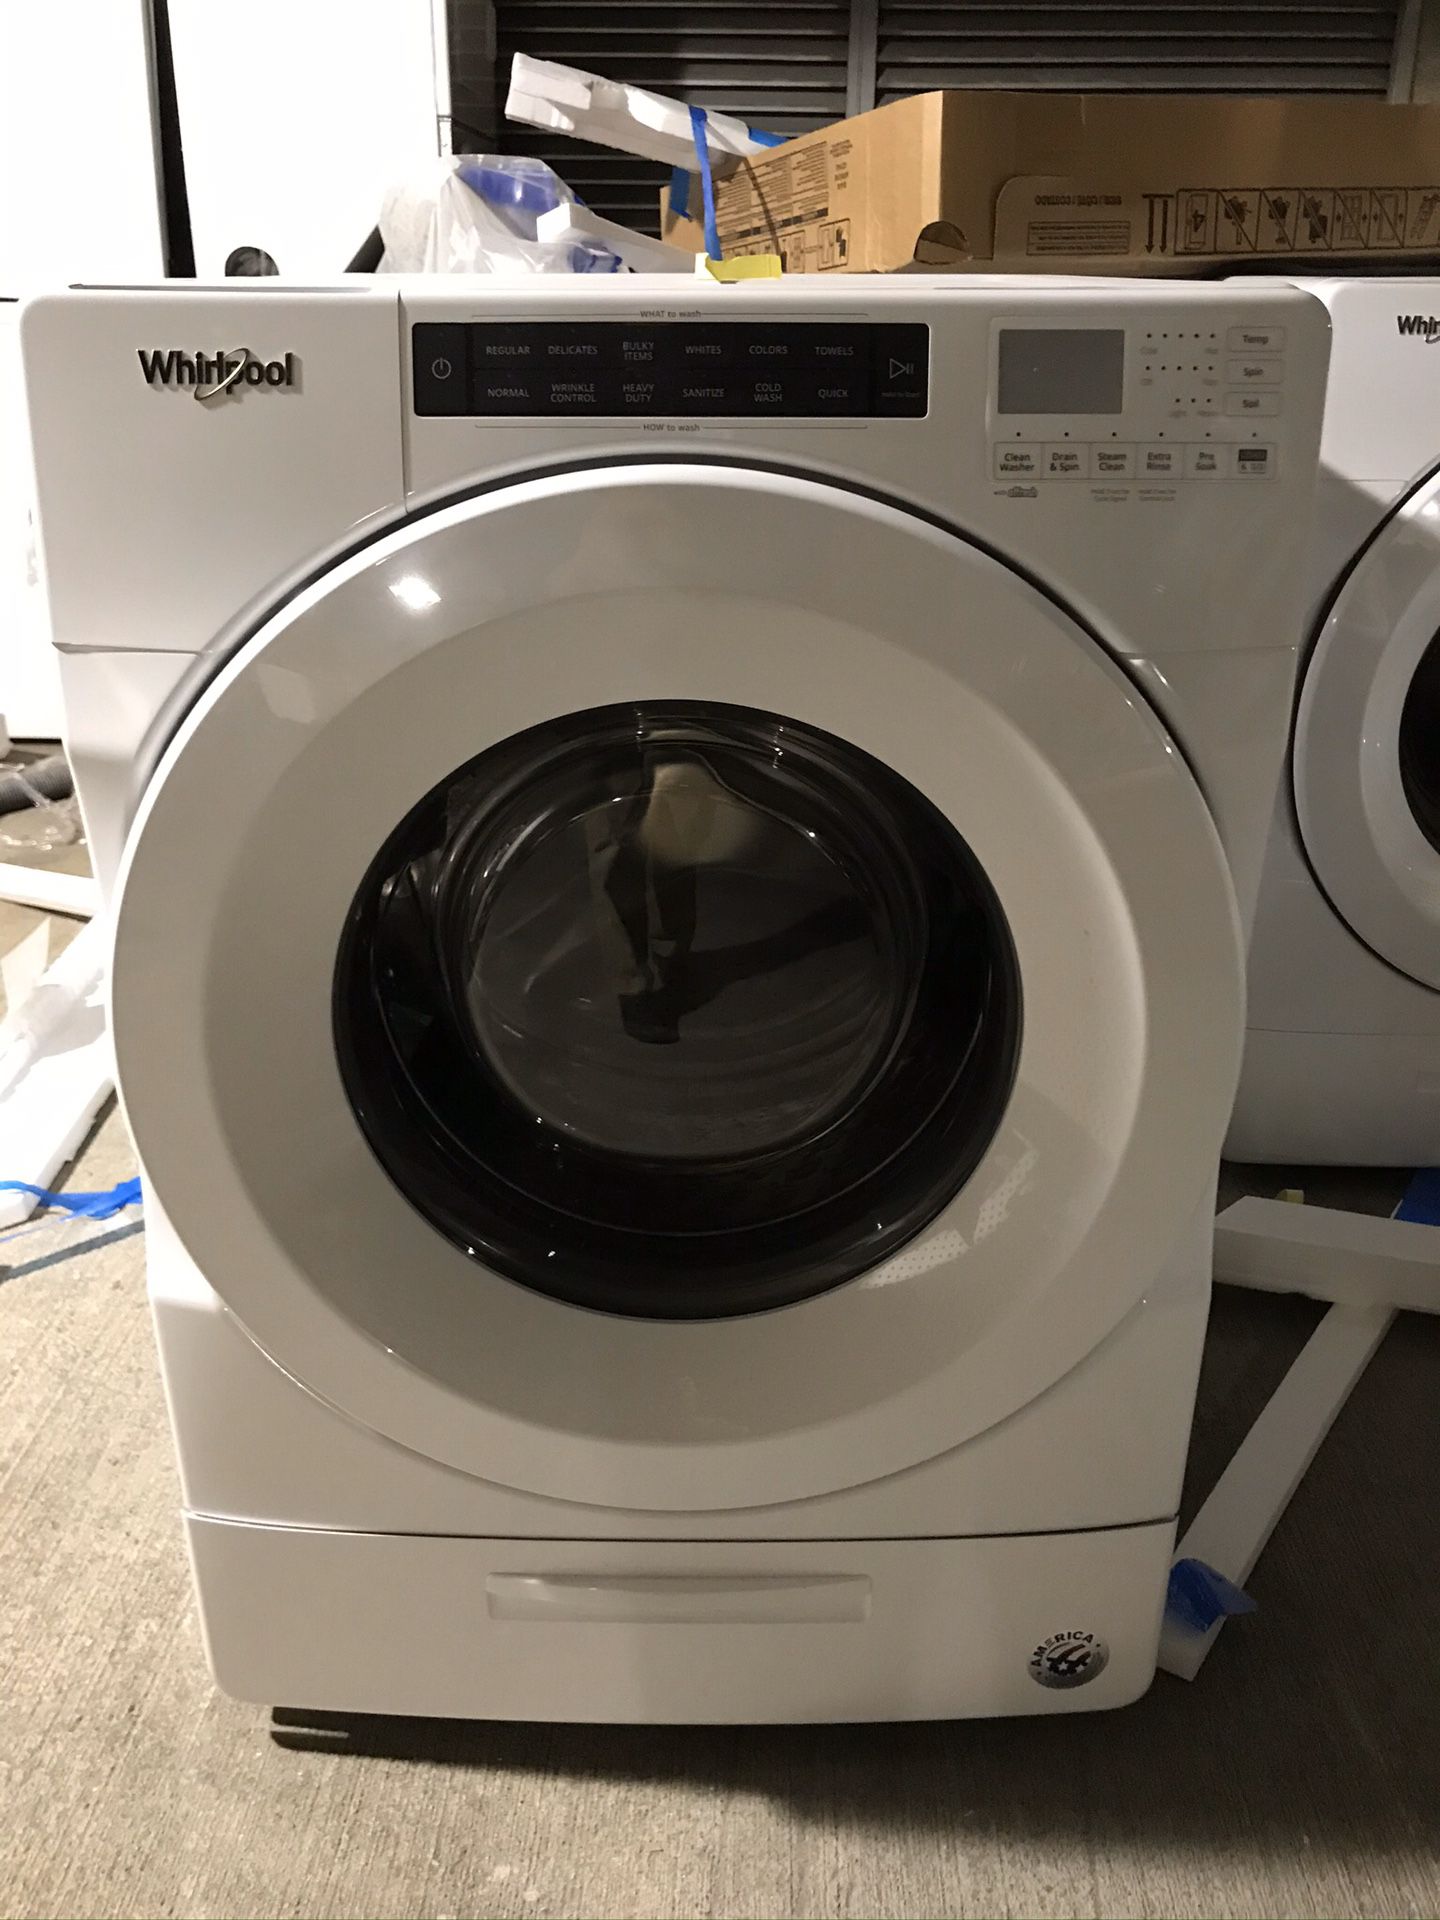 Brand new whirlpool front loader washer machine